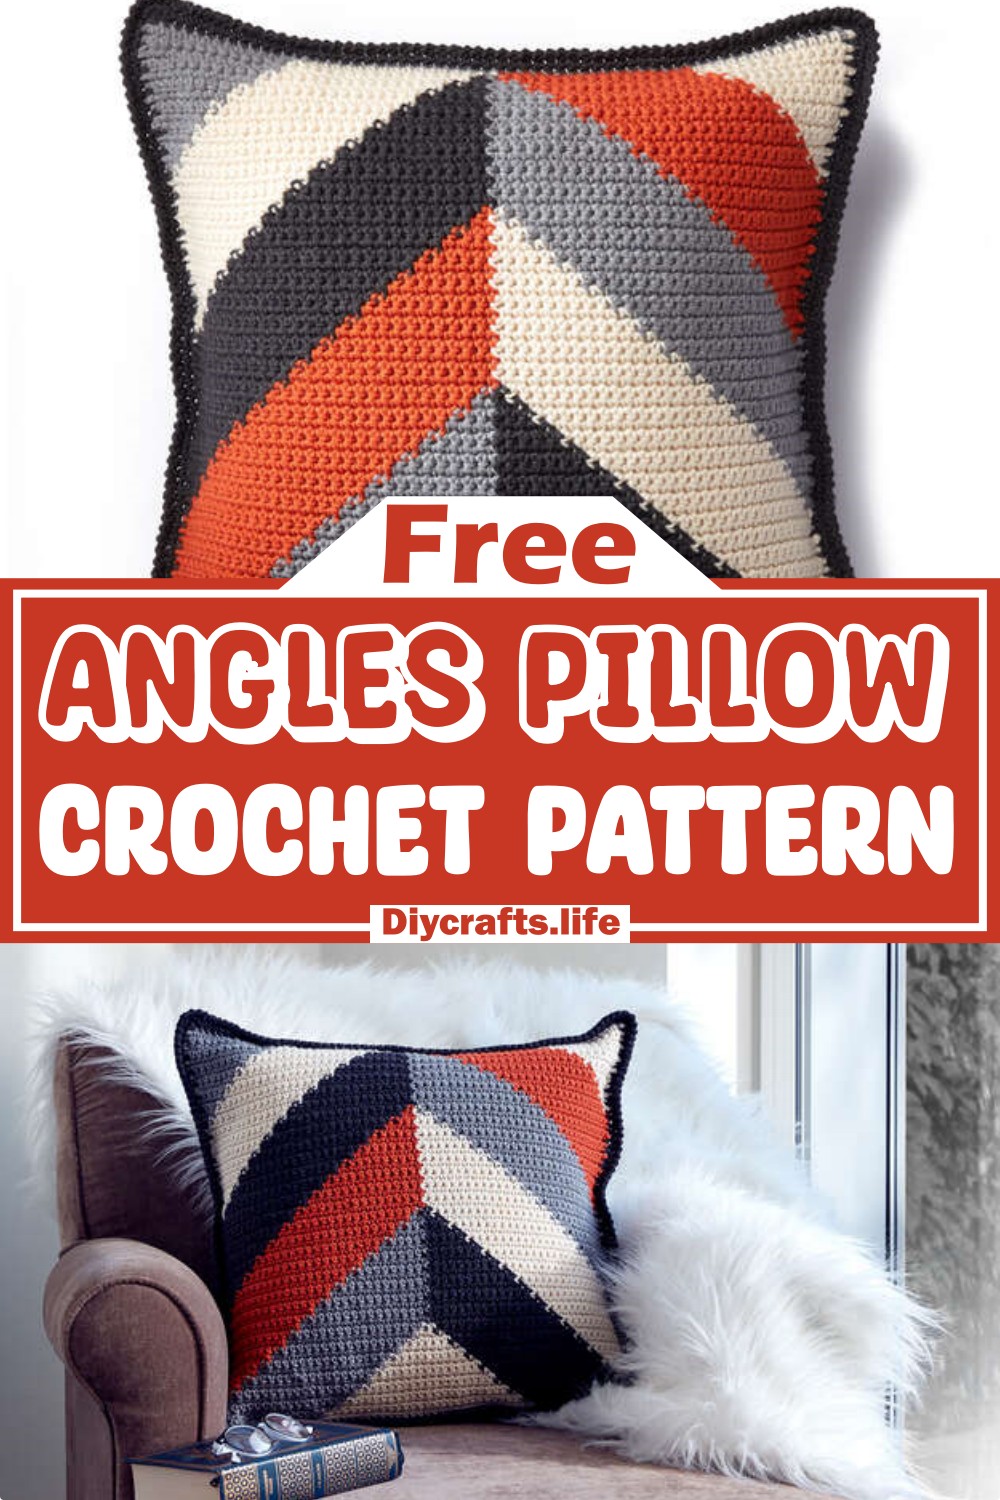 Angles Crochet Pillow